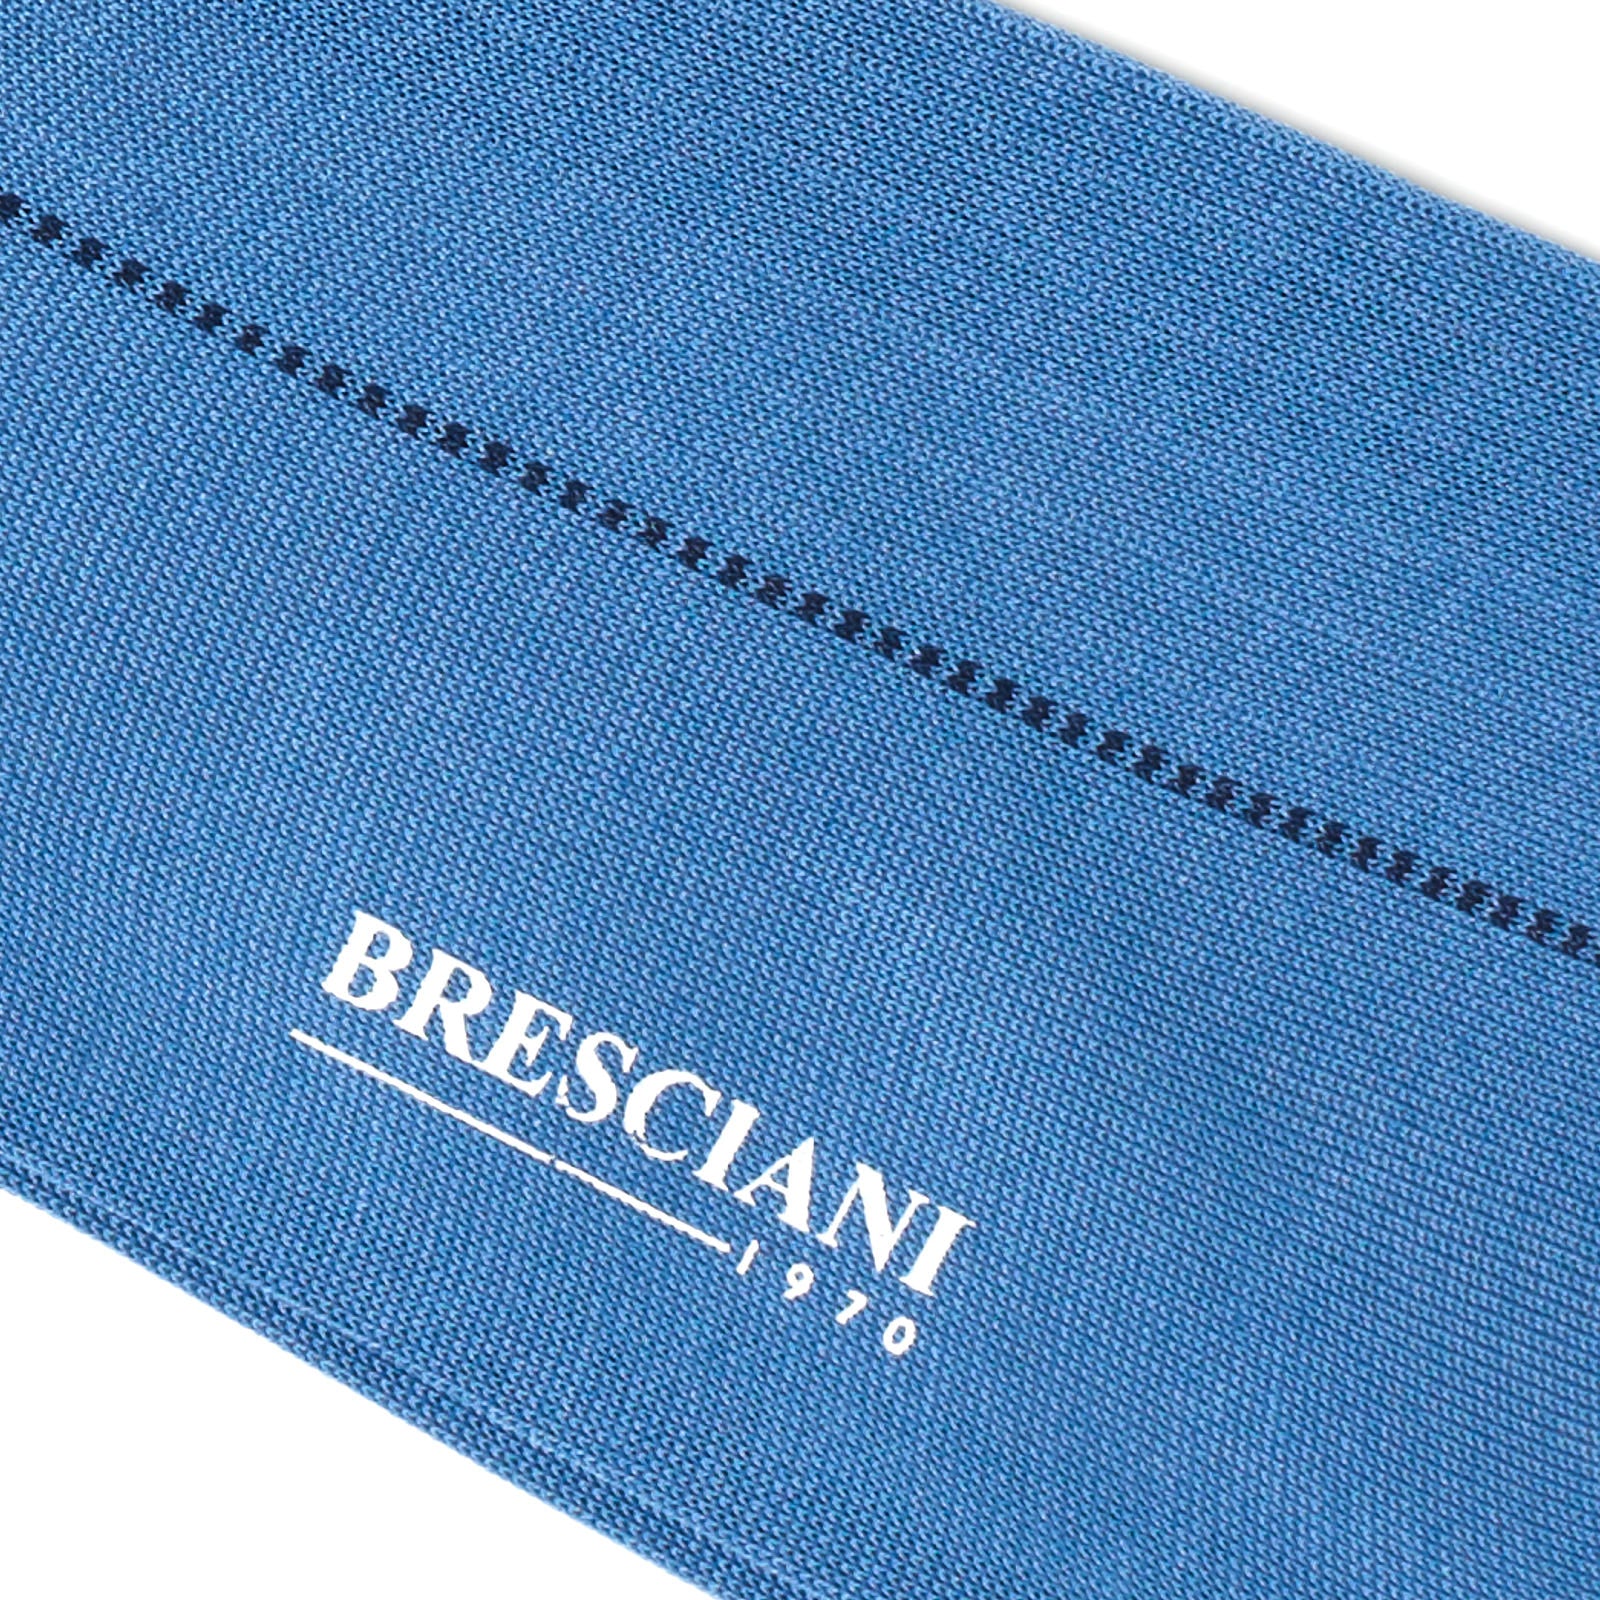 BRESCIANI Cotton Small Pattern Design Mid Calf Length Socks US M-L